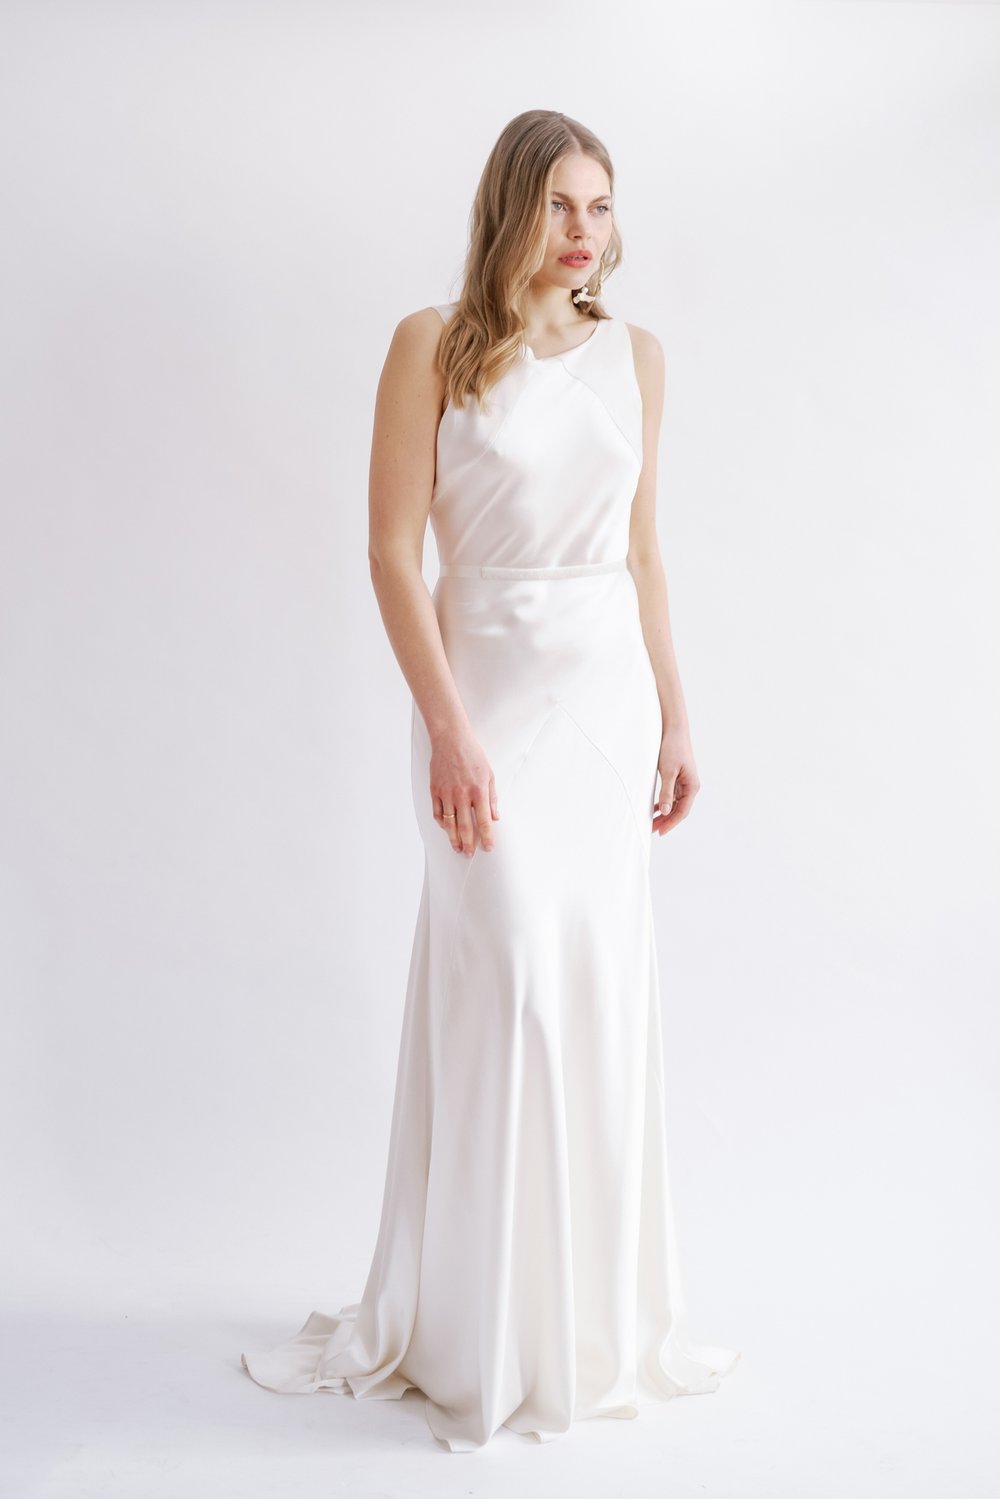 Gladioli silk wedding gown Kate Beaumont Sheffield 1.jpg